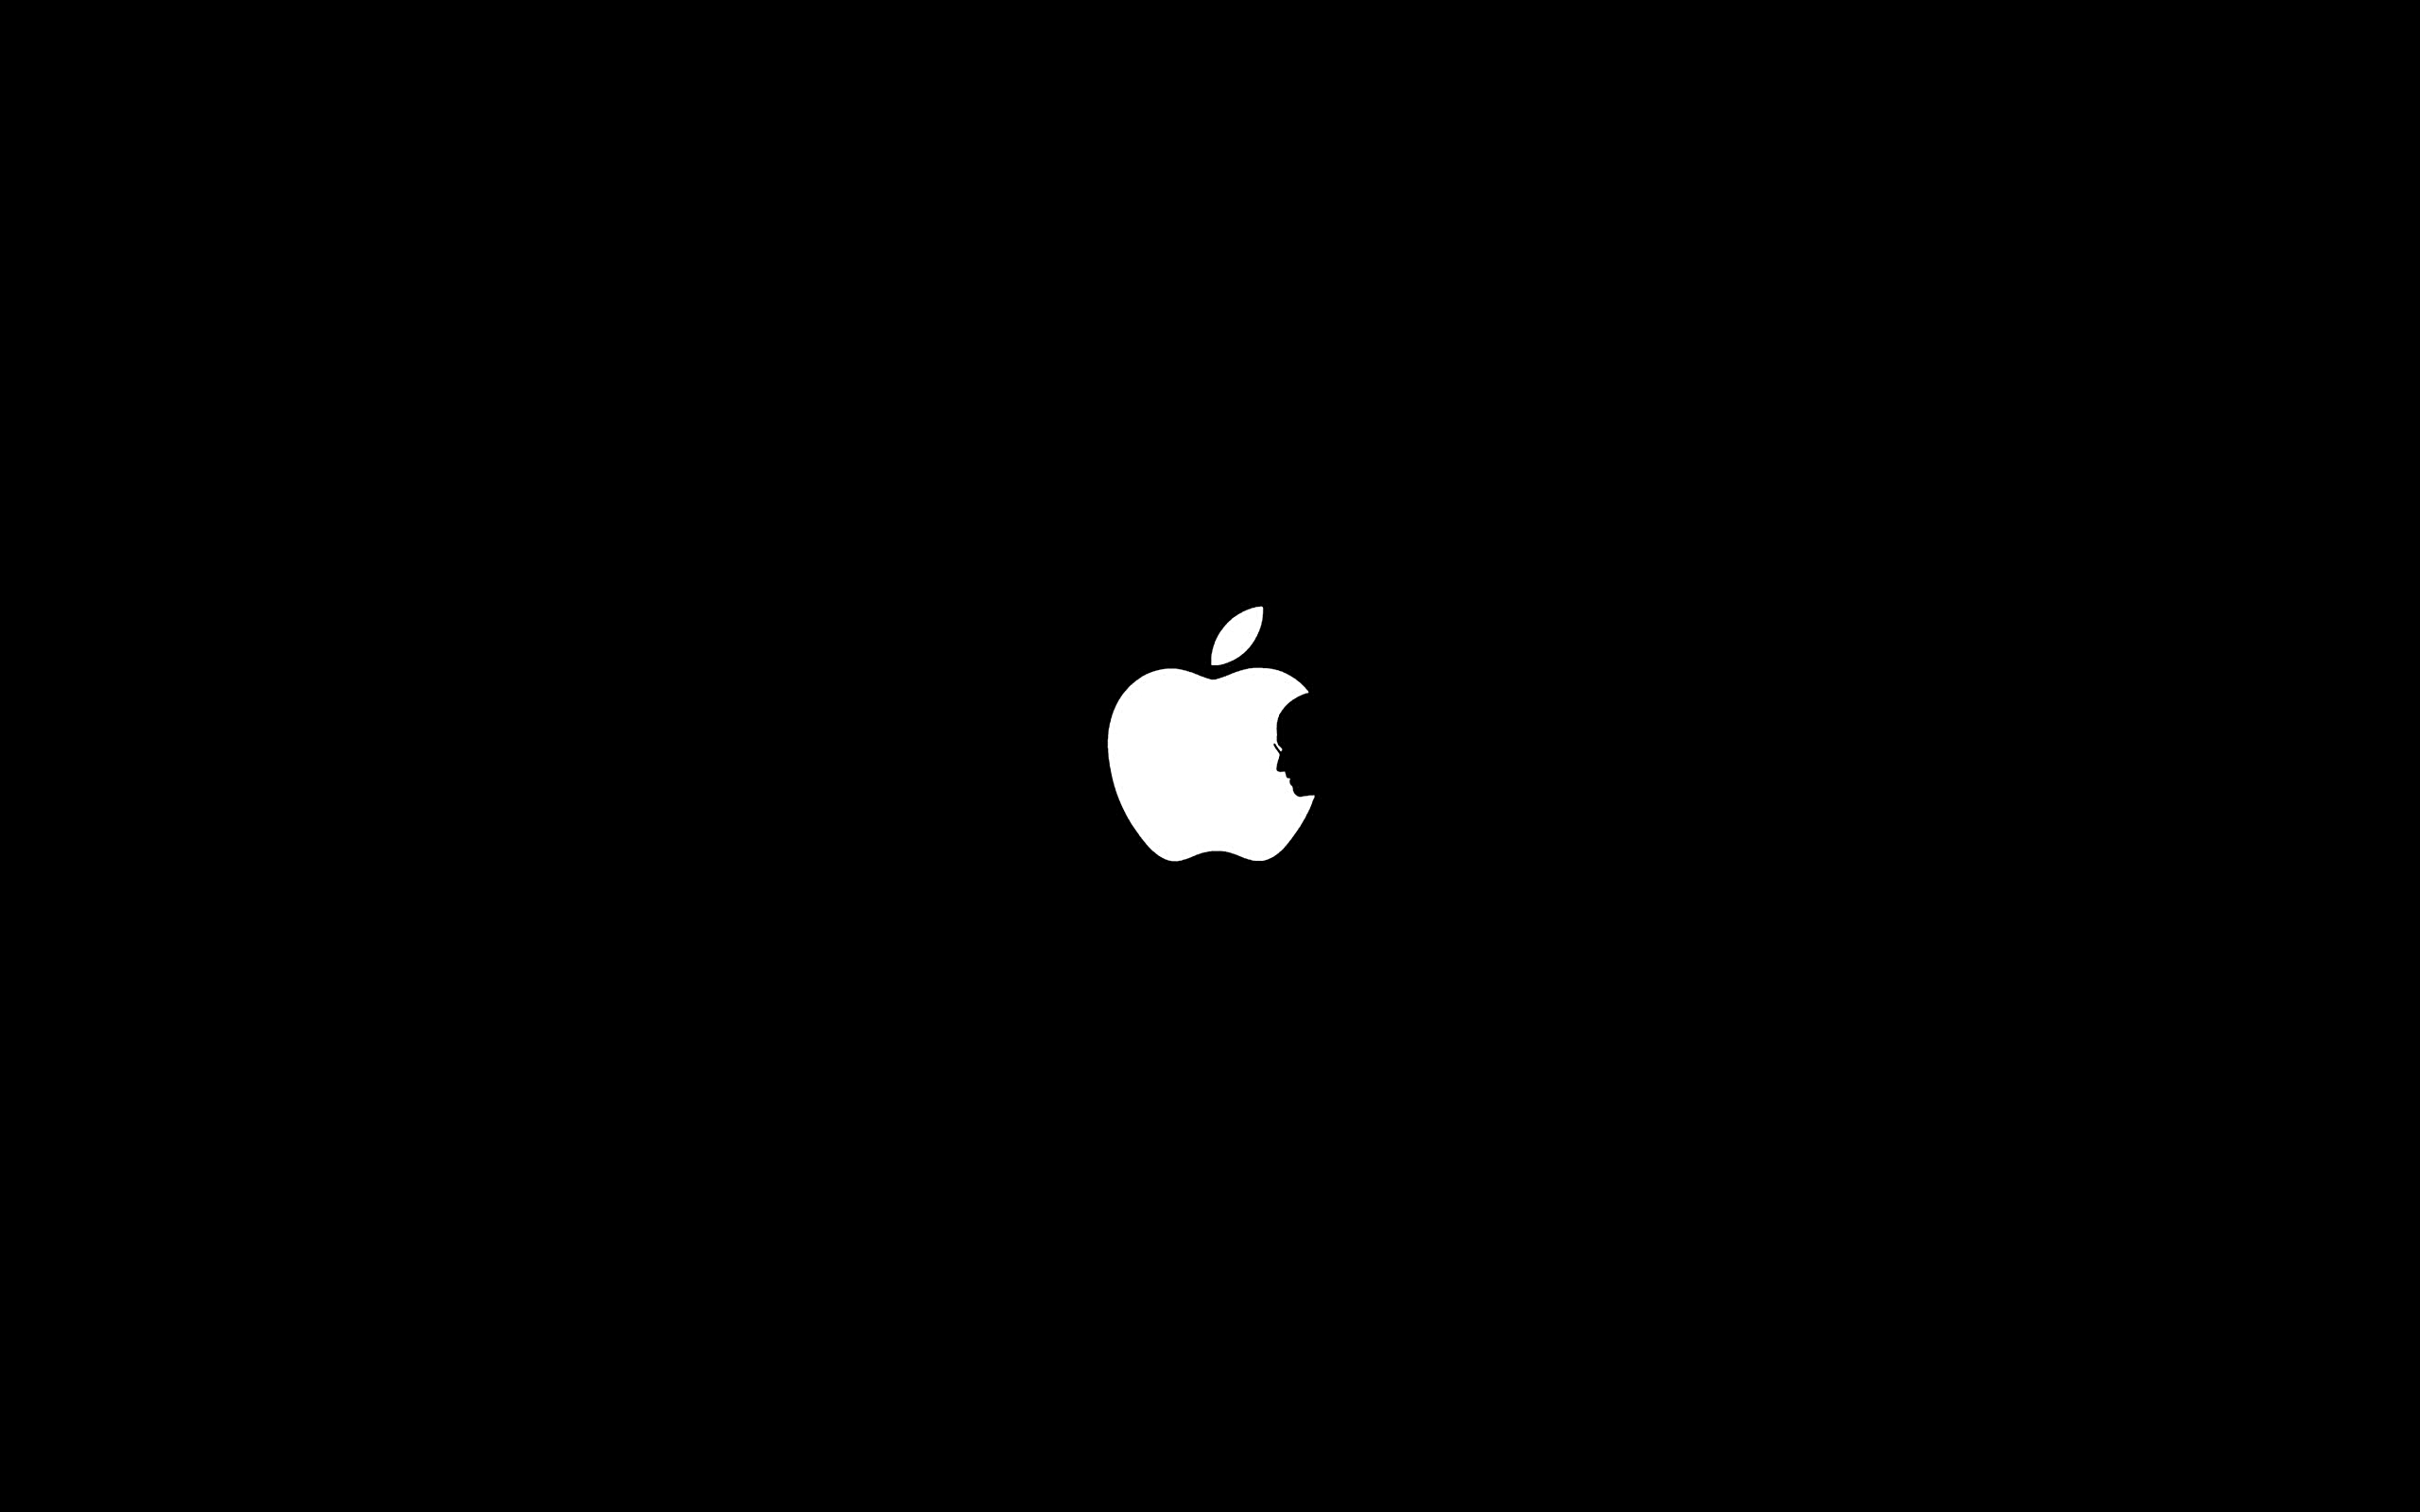 Steve Jobs Silhouette Within The Apple Logo